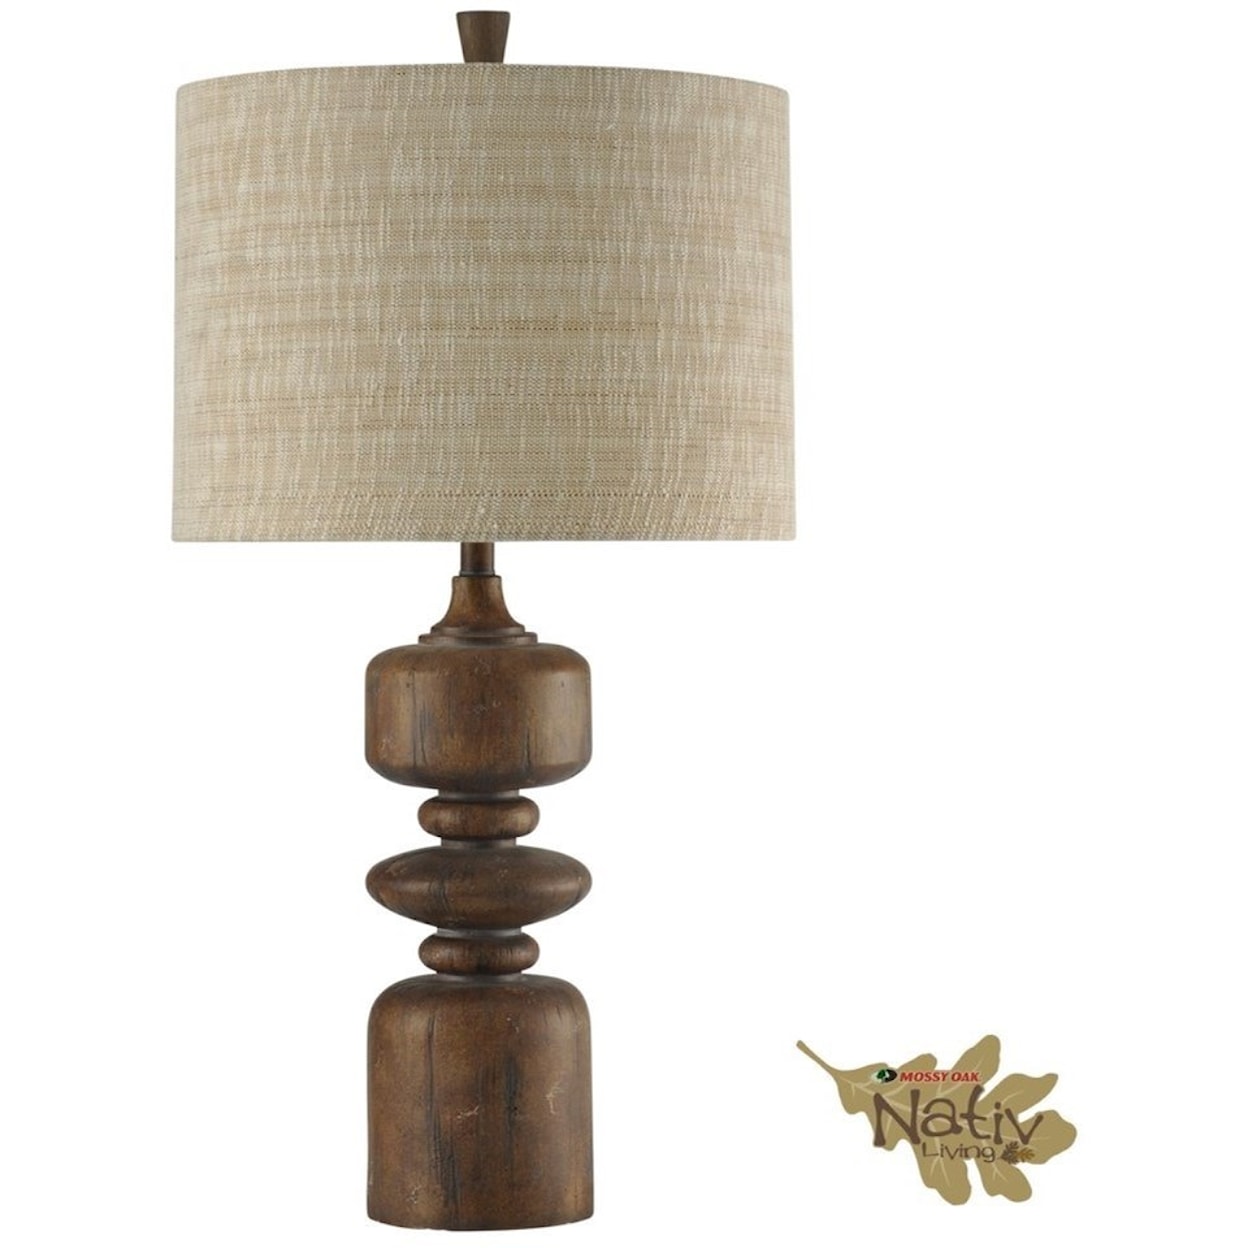 StyleCraft Lamps Cotton Wood | Mossy Oak Branded Table Lamp